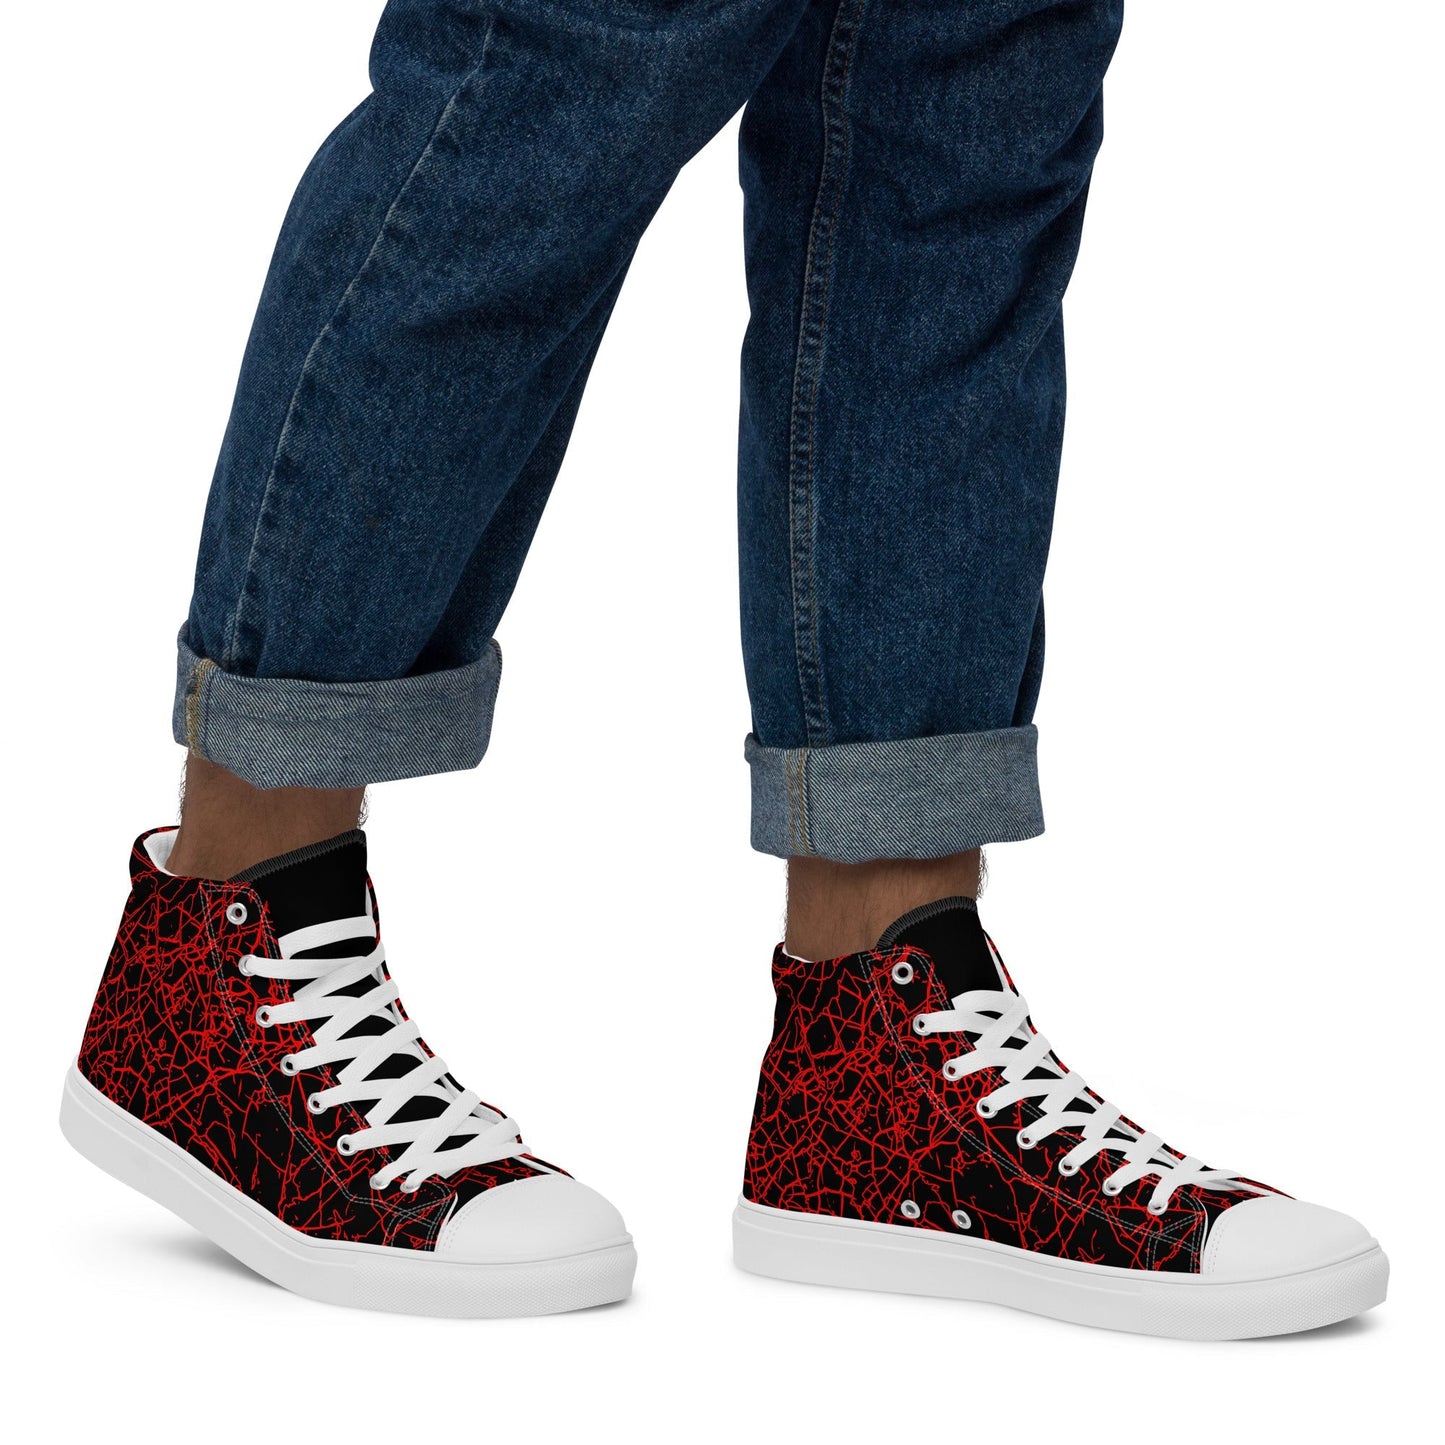 Men’s Red Crackle Sneakers